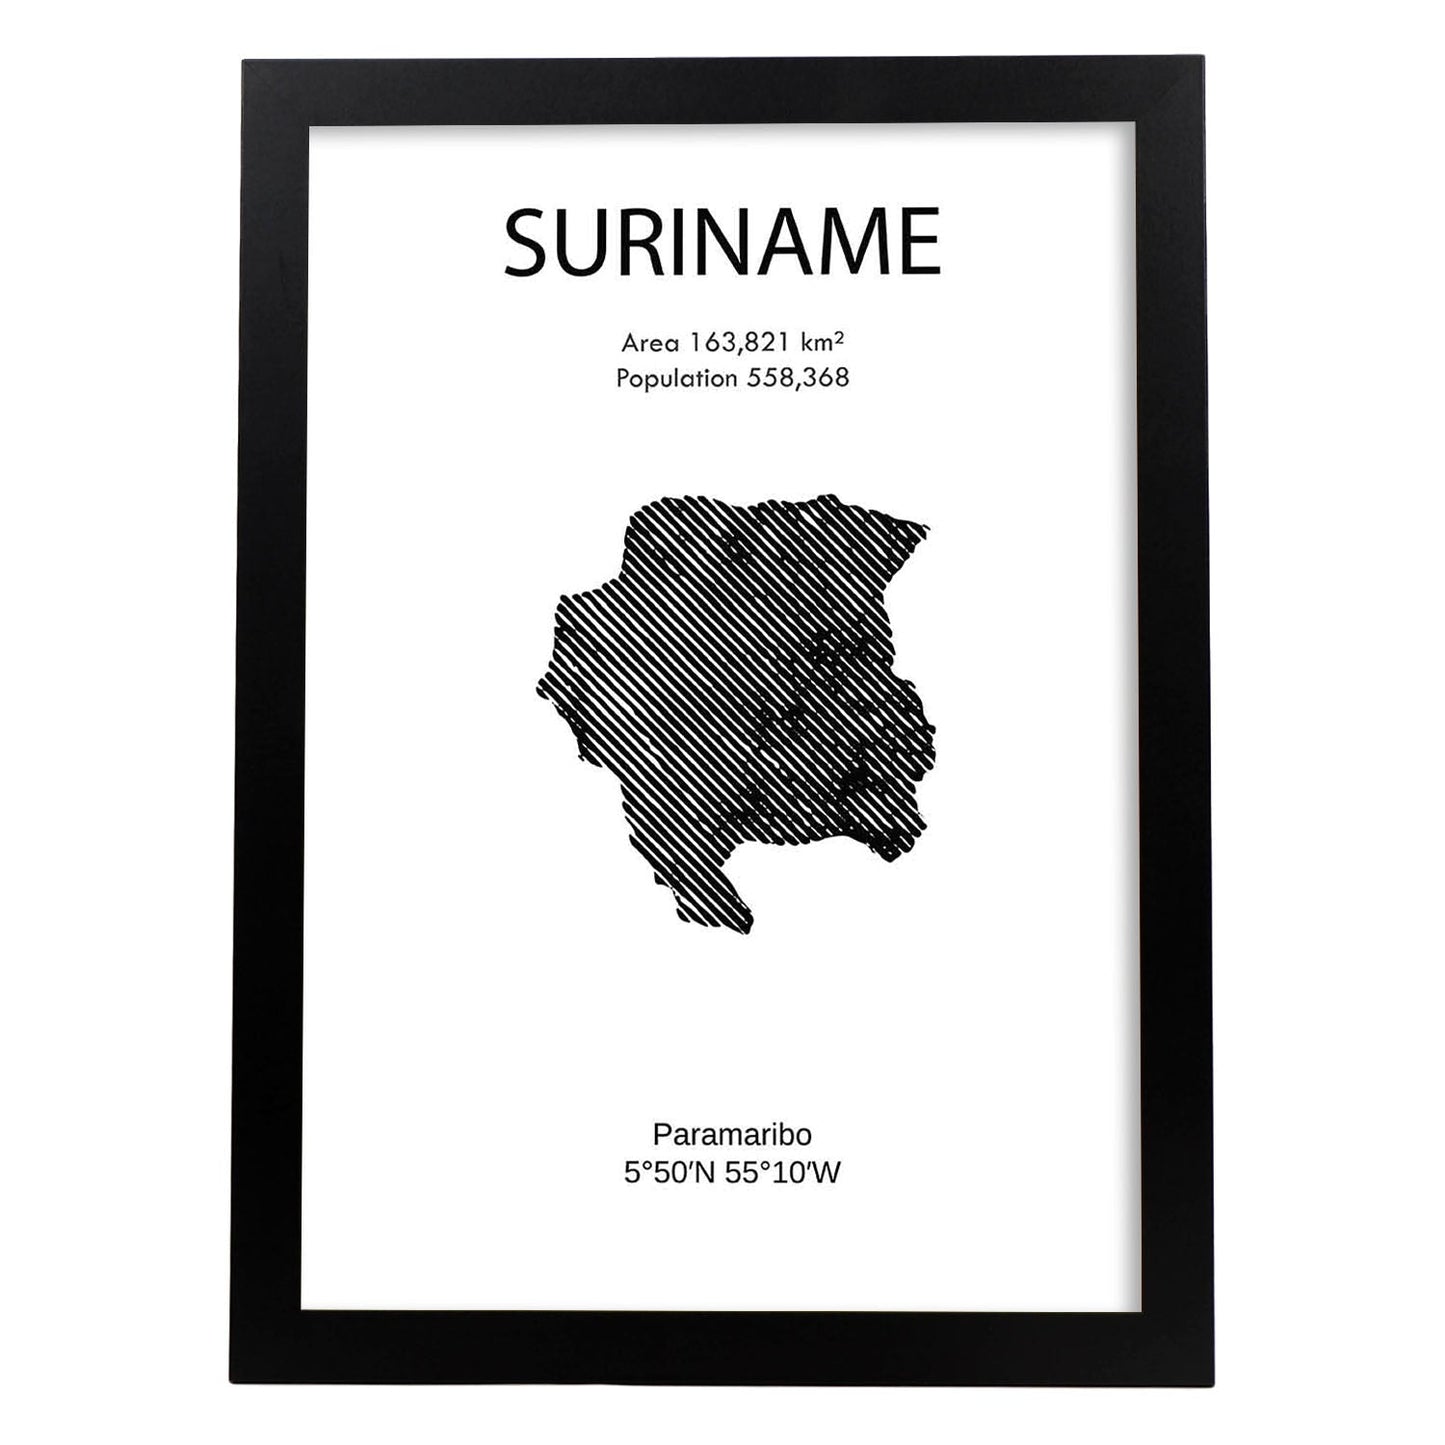 Poster de Surinam. Láminas de paises y continentes del mundo.-Artwork-Nacnic-A4-Marco Negro-Nacnic Estudio SL